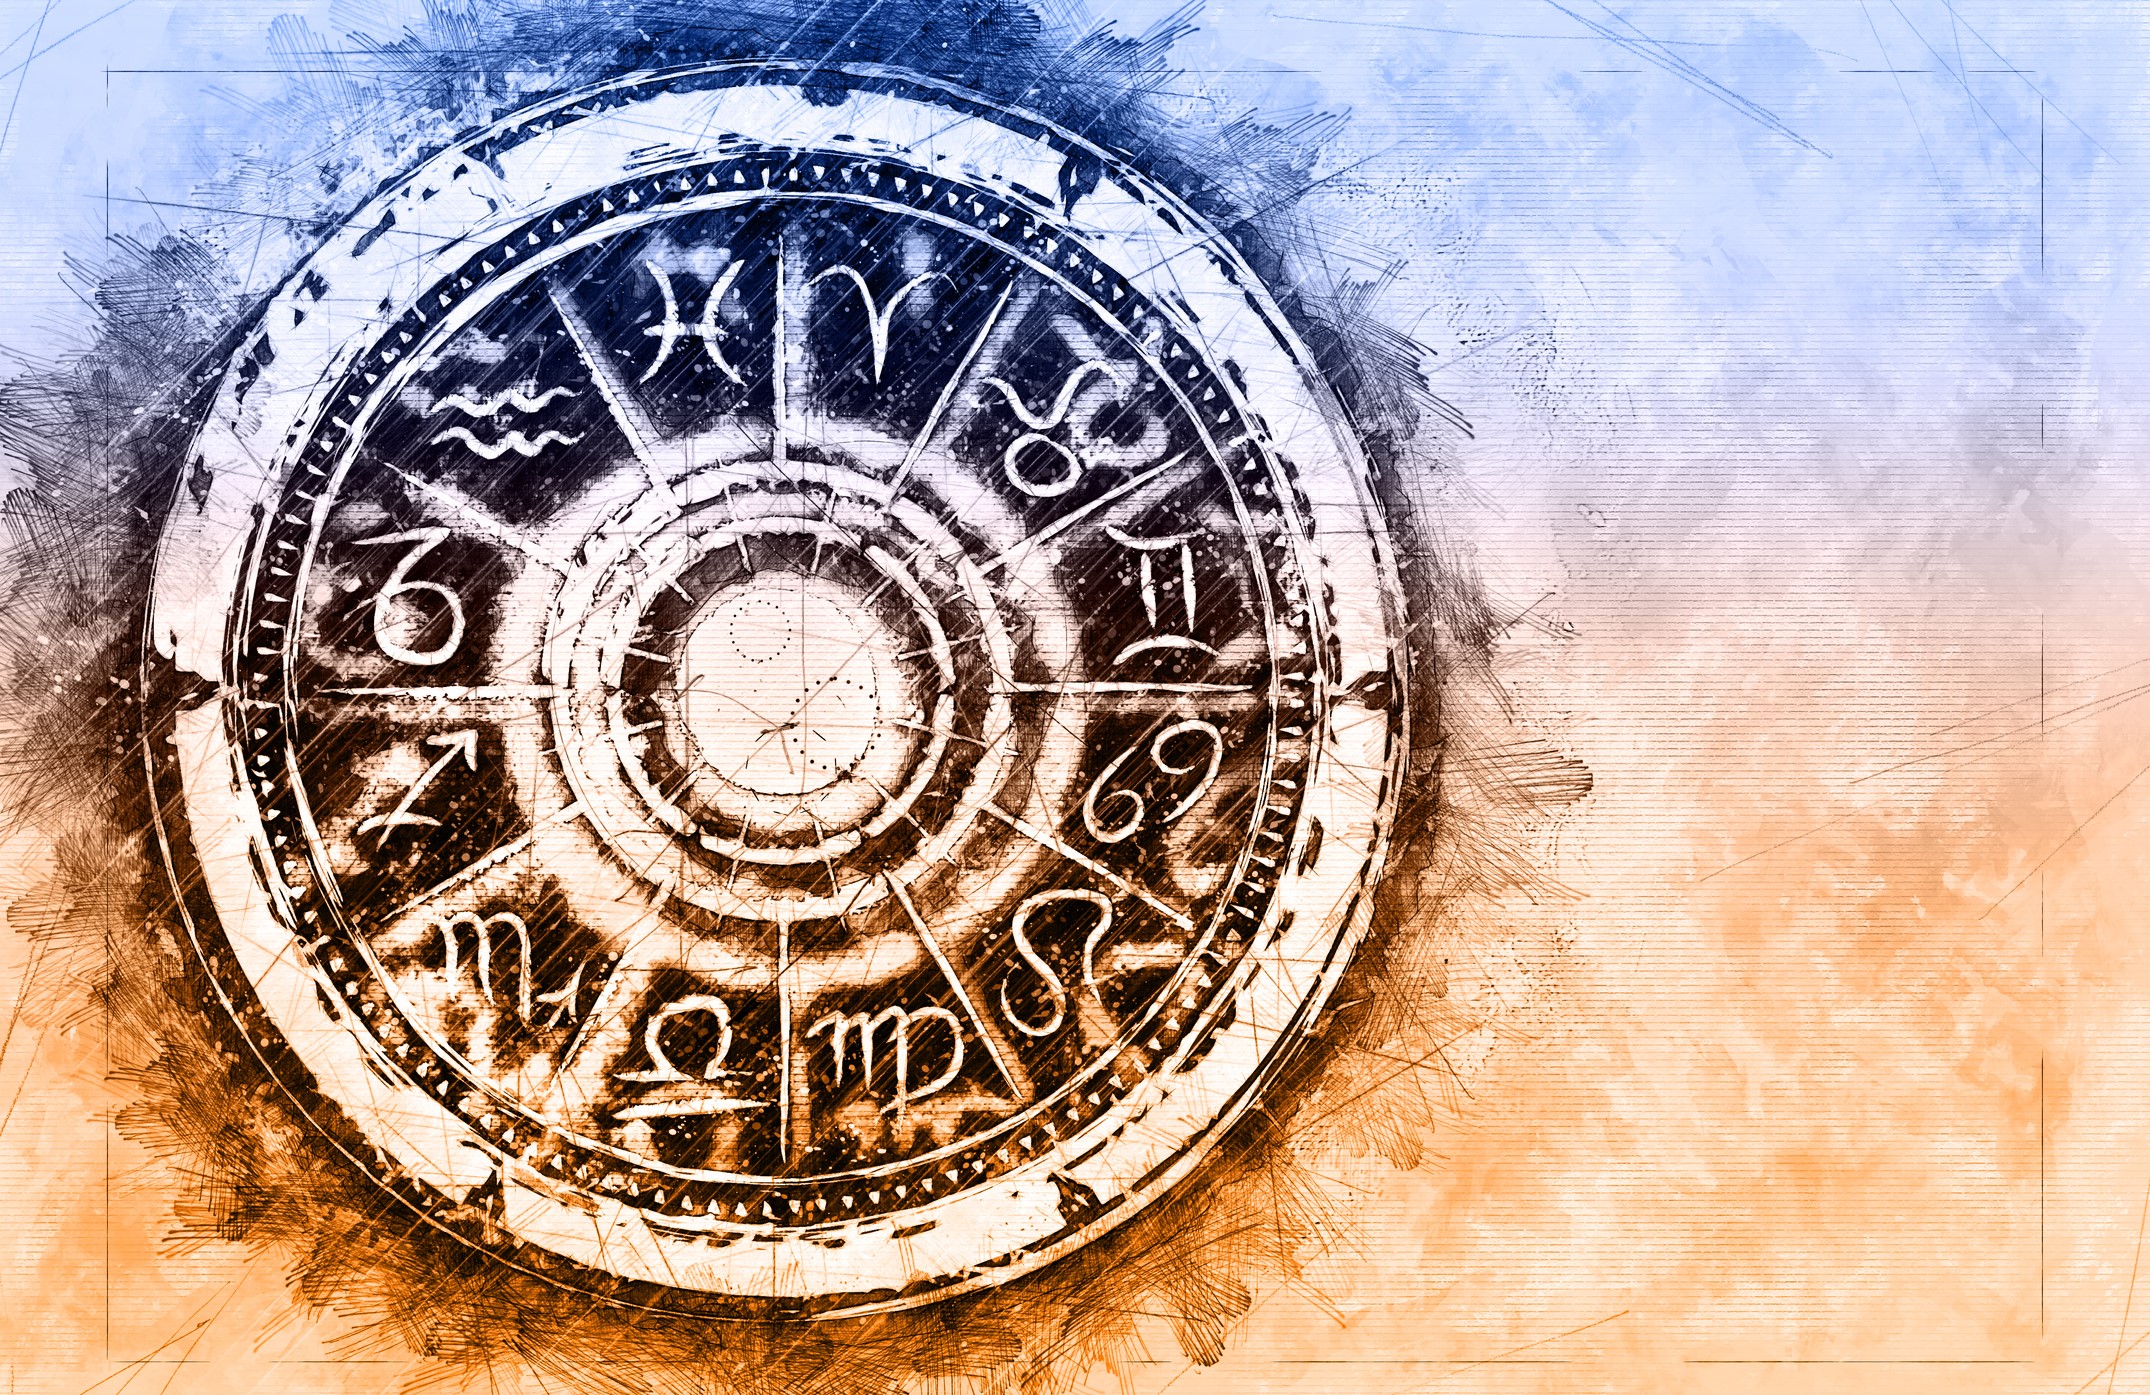 Zodiac sign horoscope circle on grunge background. Creative Astronomy Symbol concept